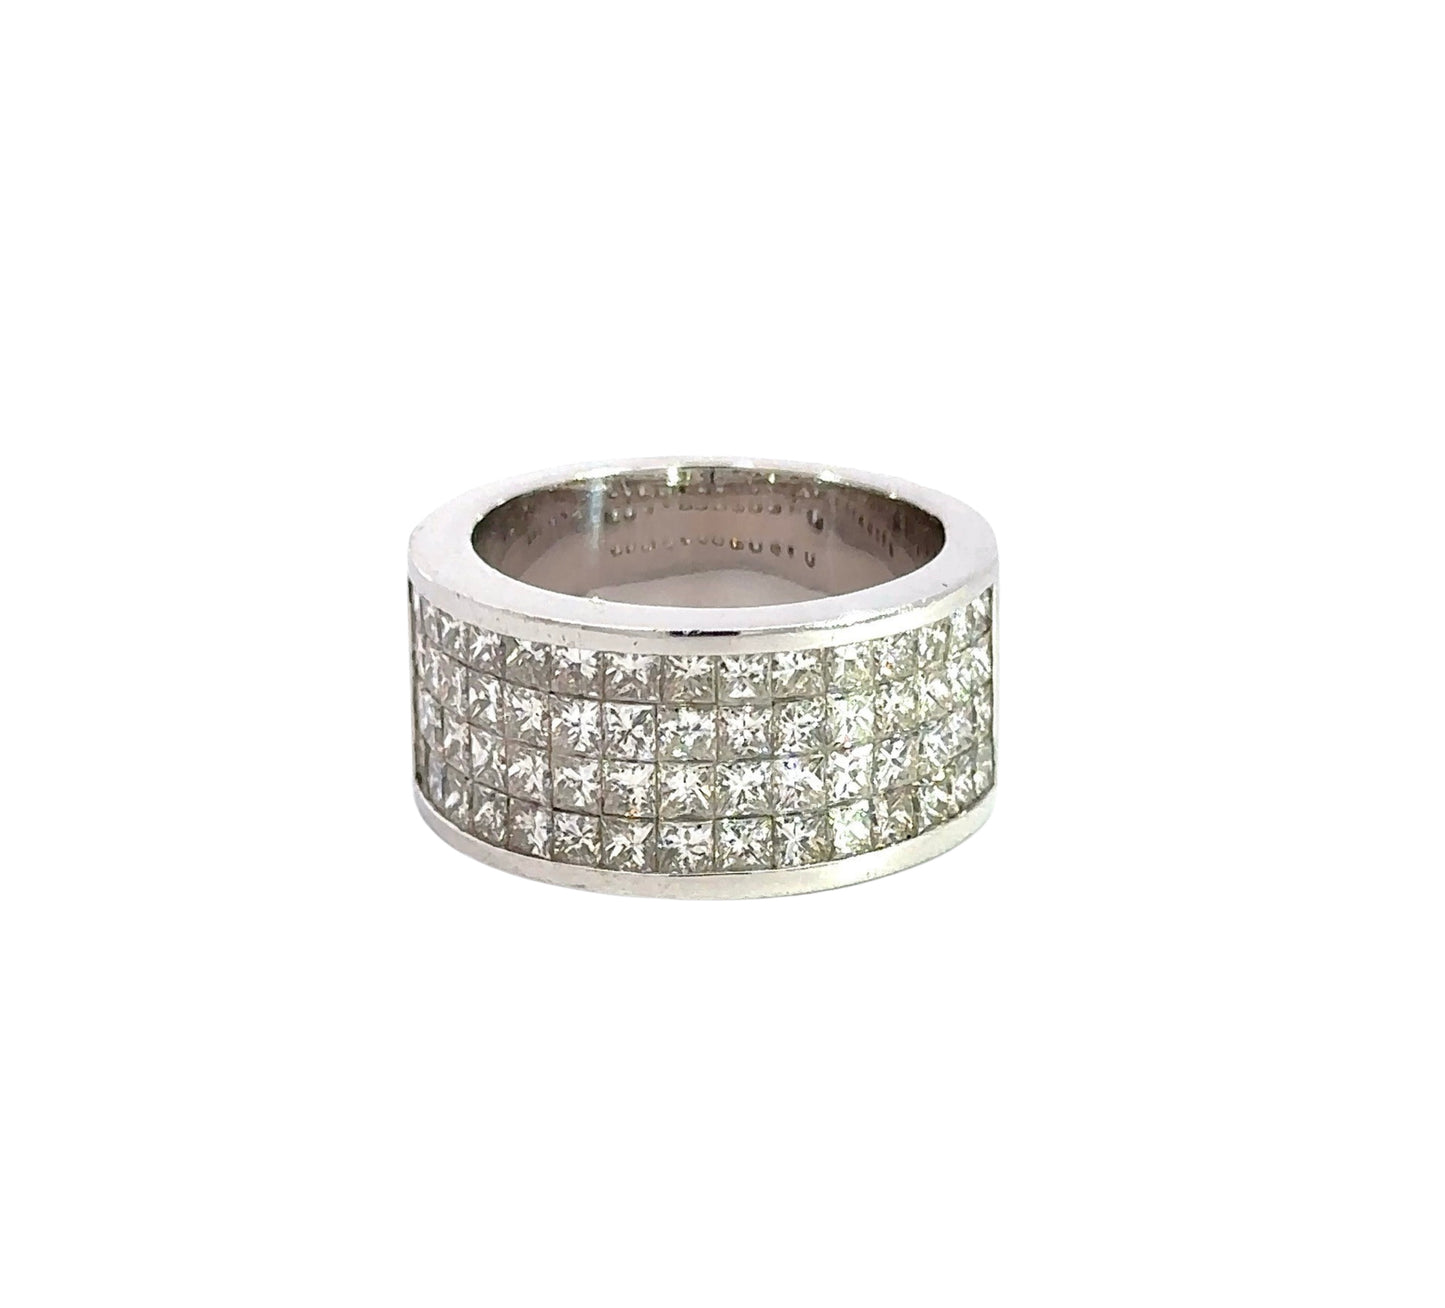 Men's Solid 14K White Gold 3.6TCW Princess-Cut Diamond Band Ring